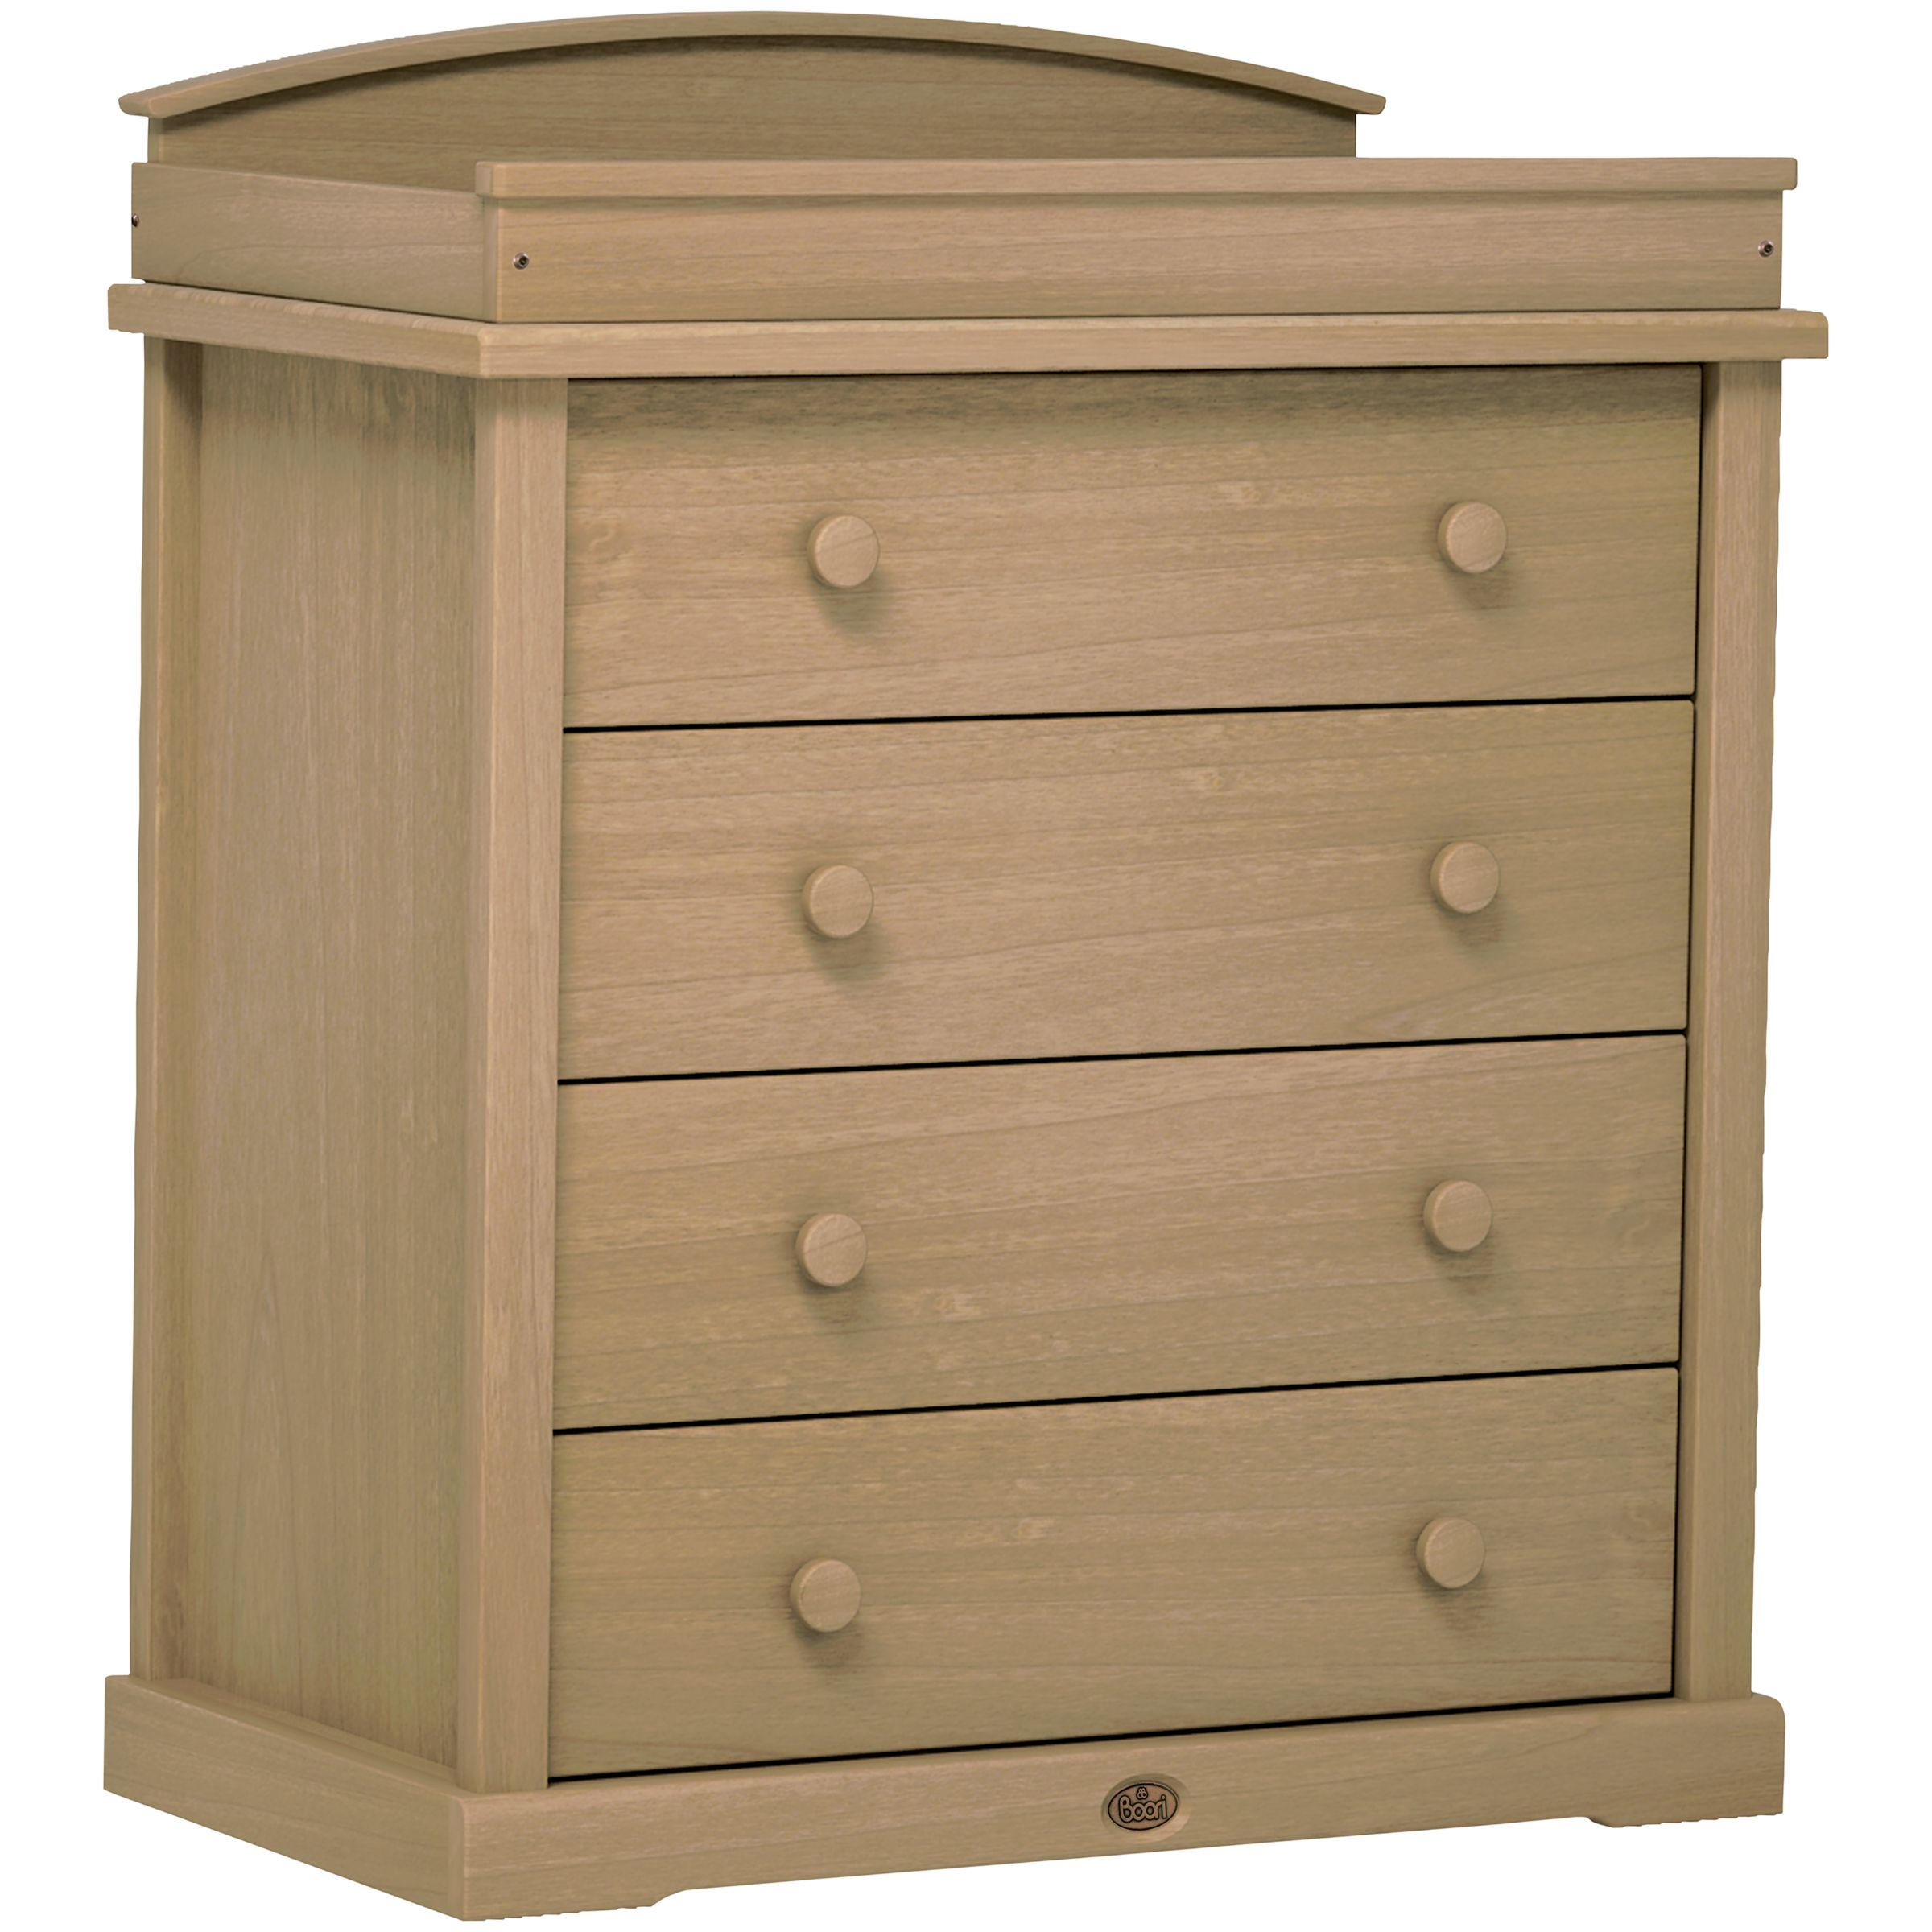 boori 6 drawer dresser